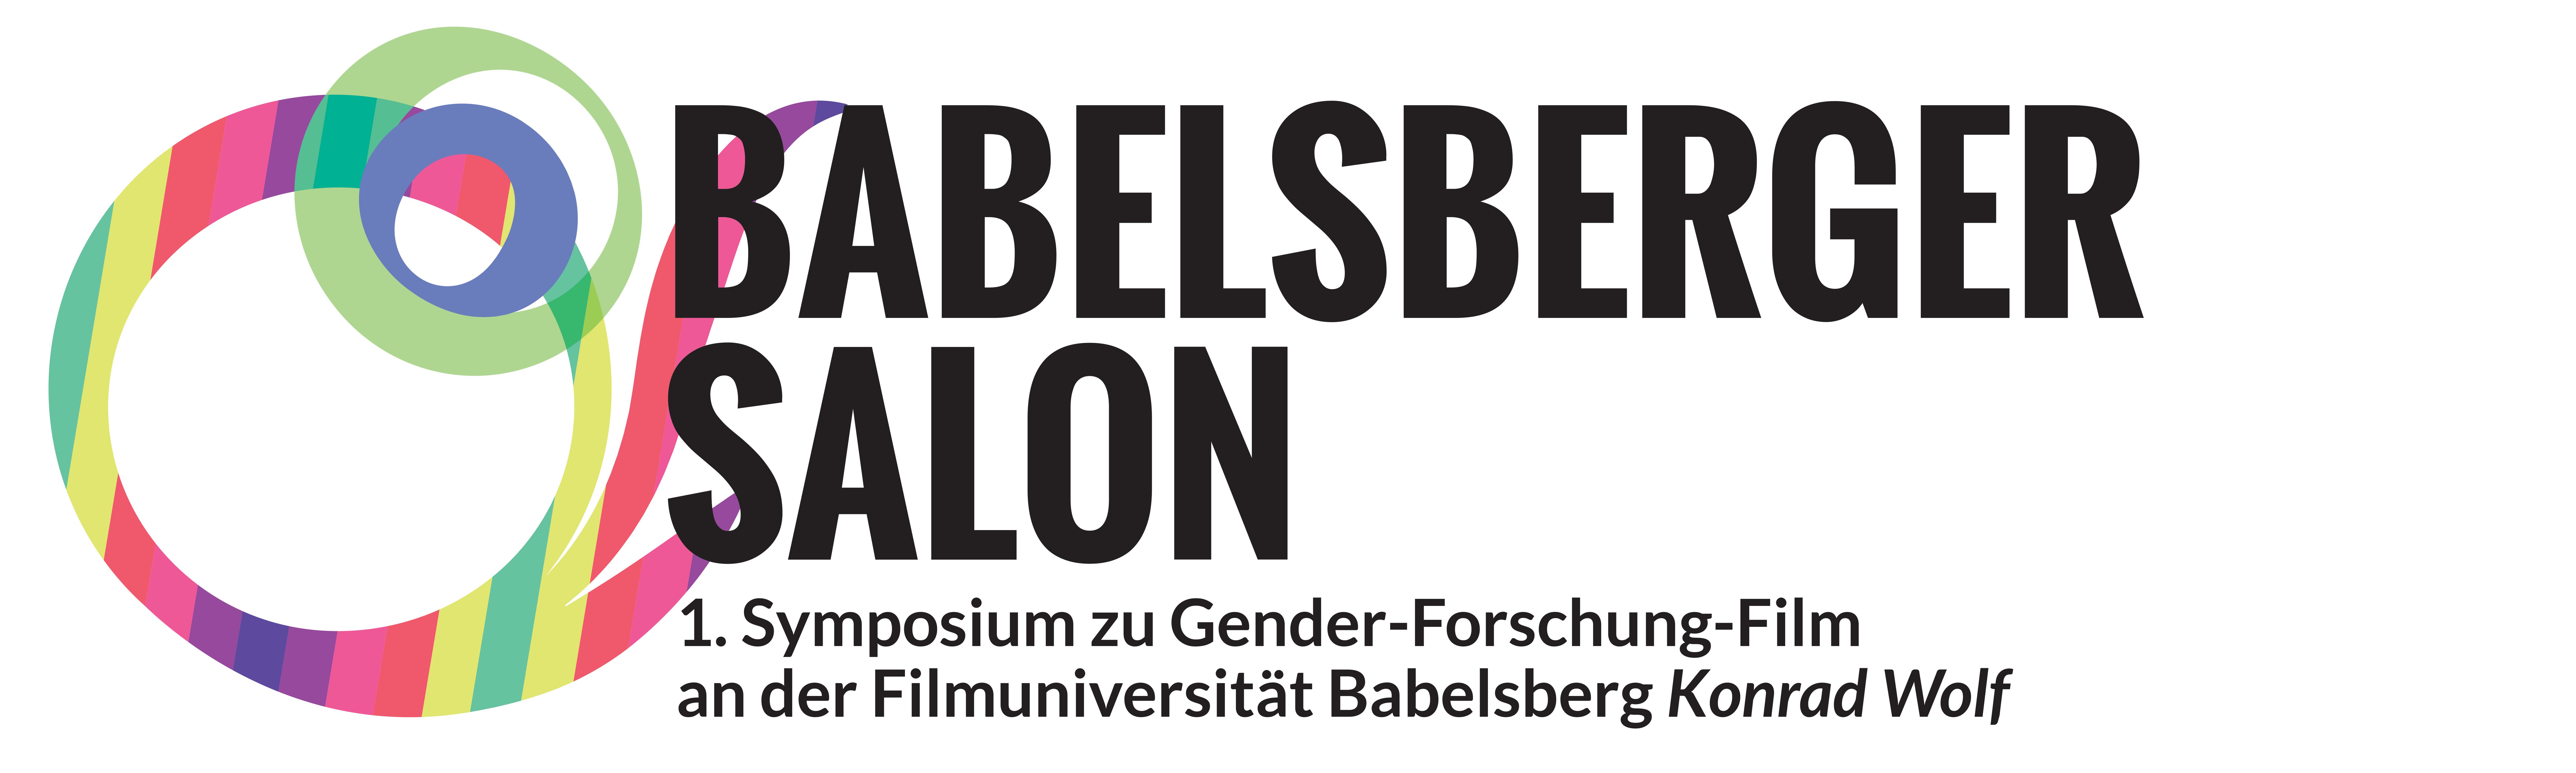 Babelsberger Salon